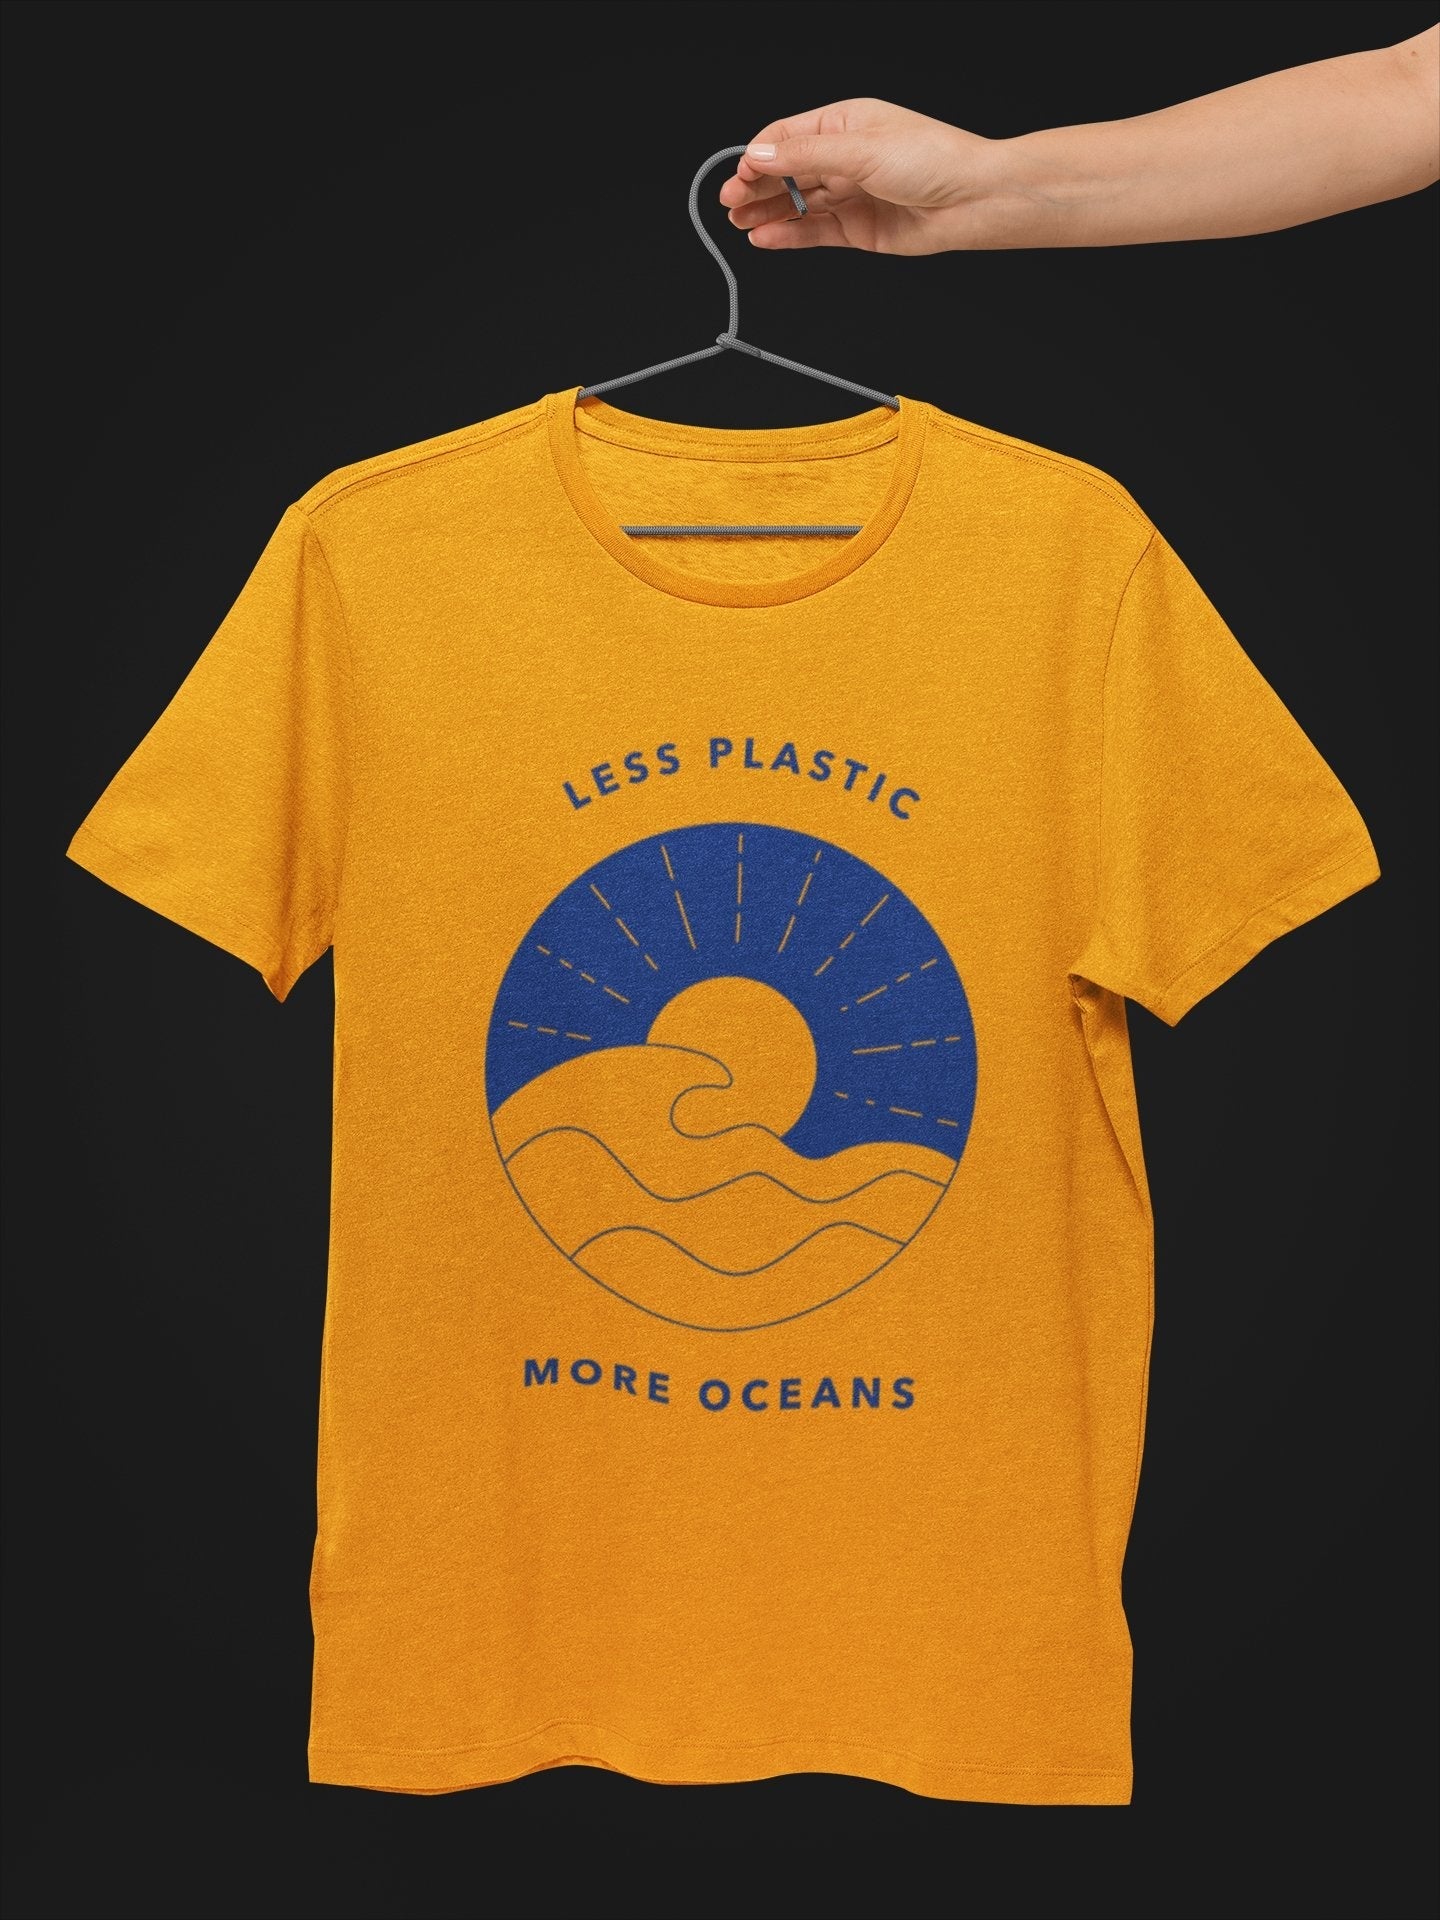 Less Plastic More Oceans Environment T-Shirt - Insane Tees